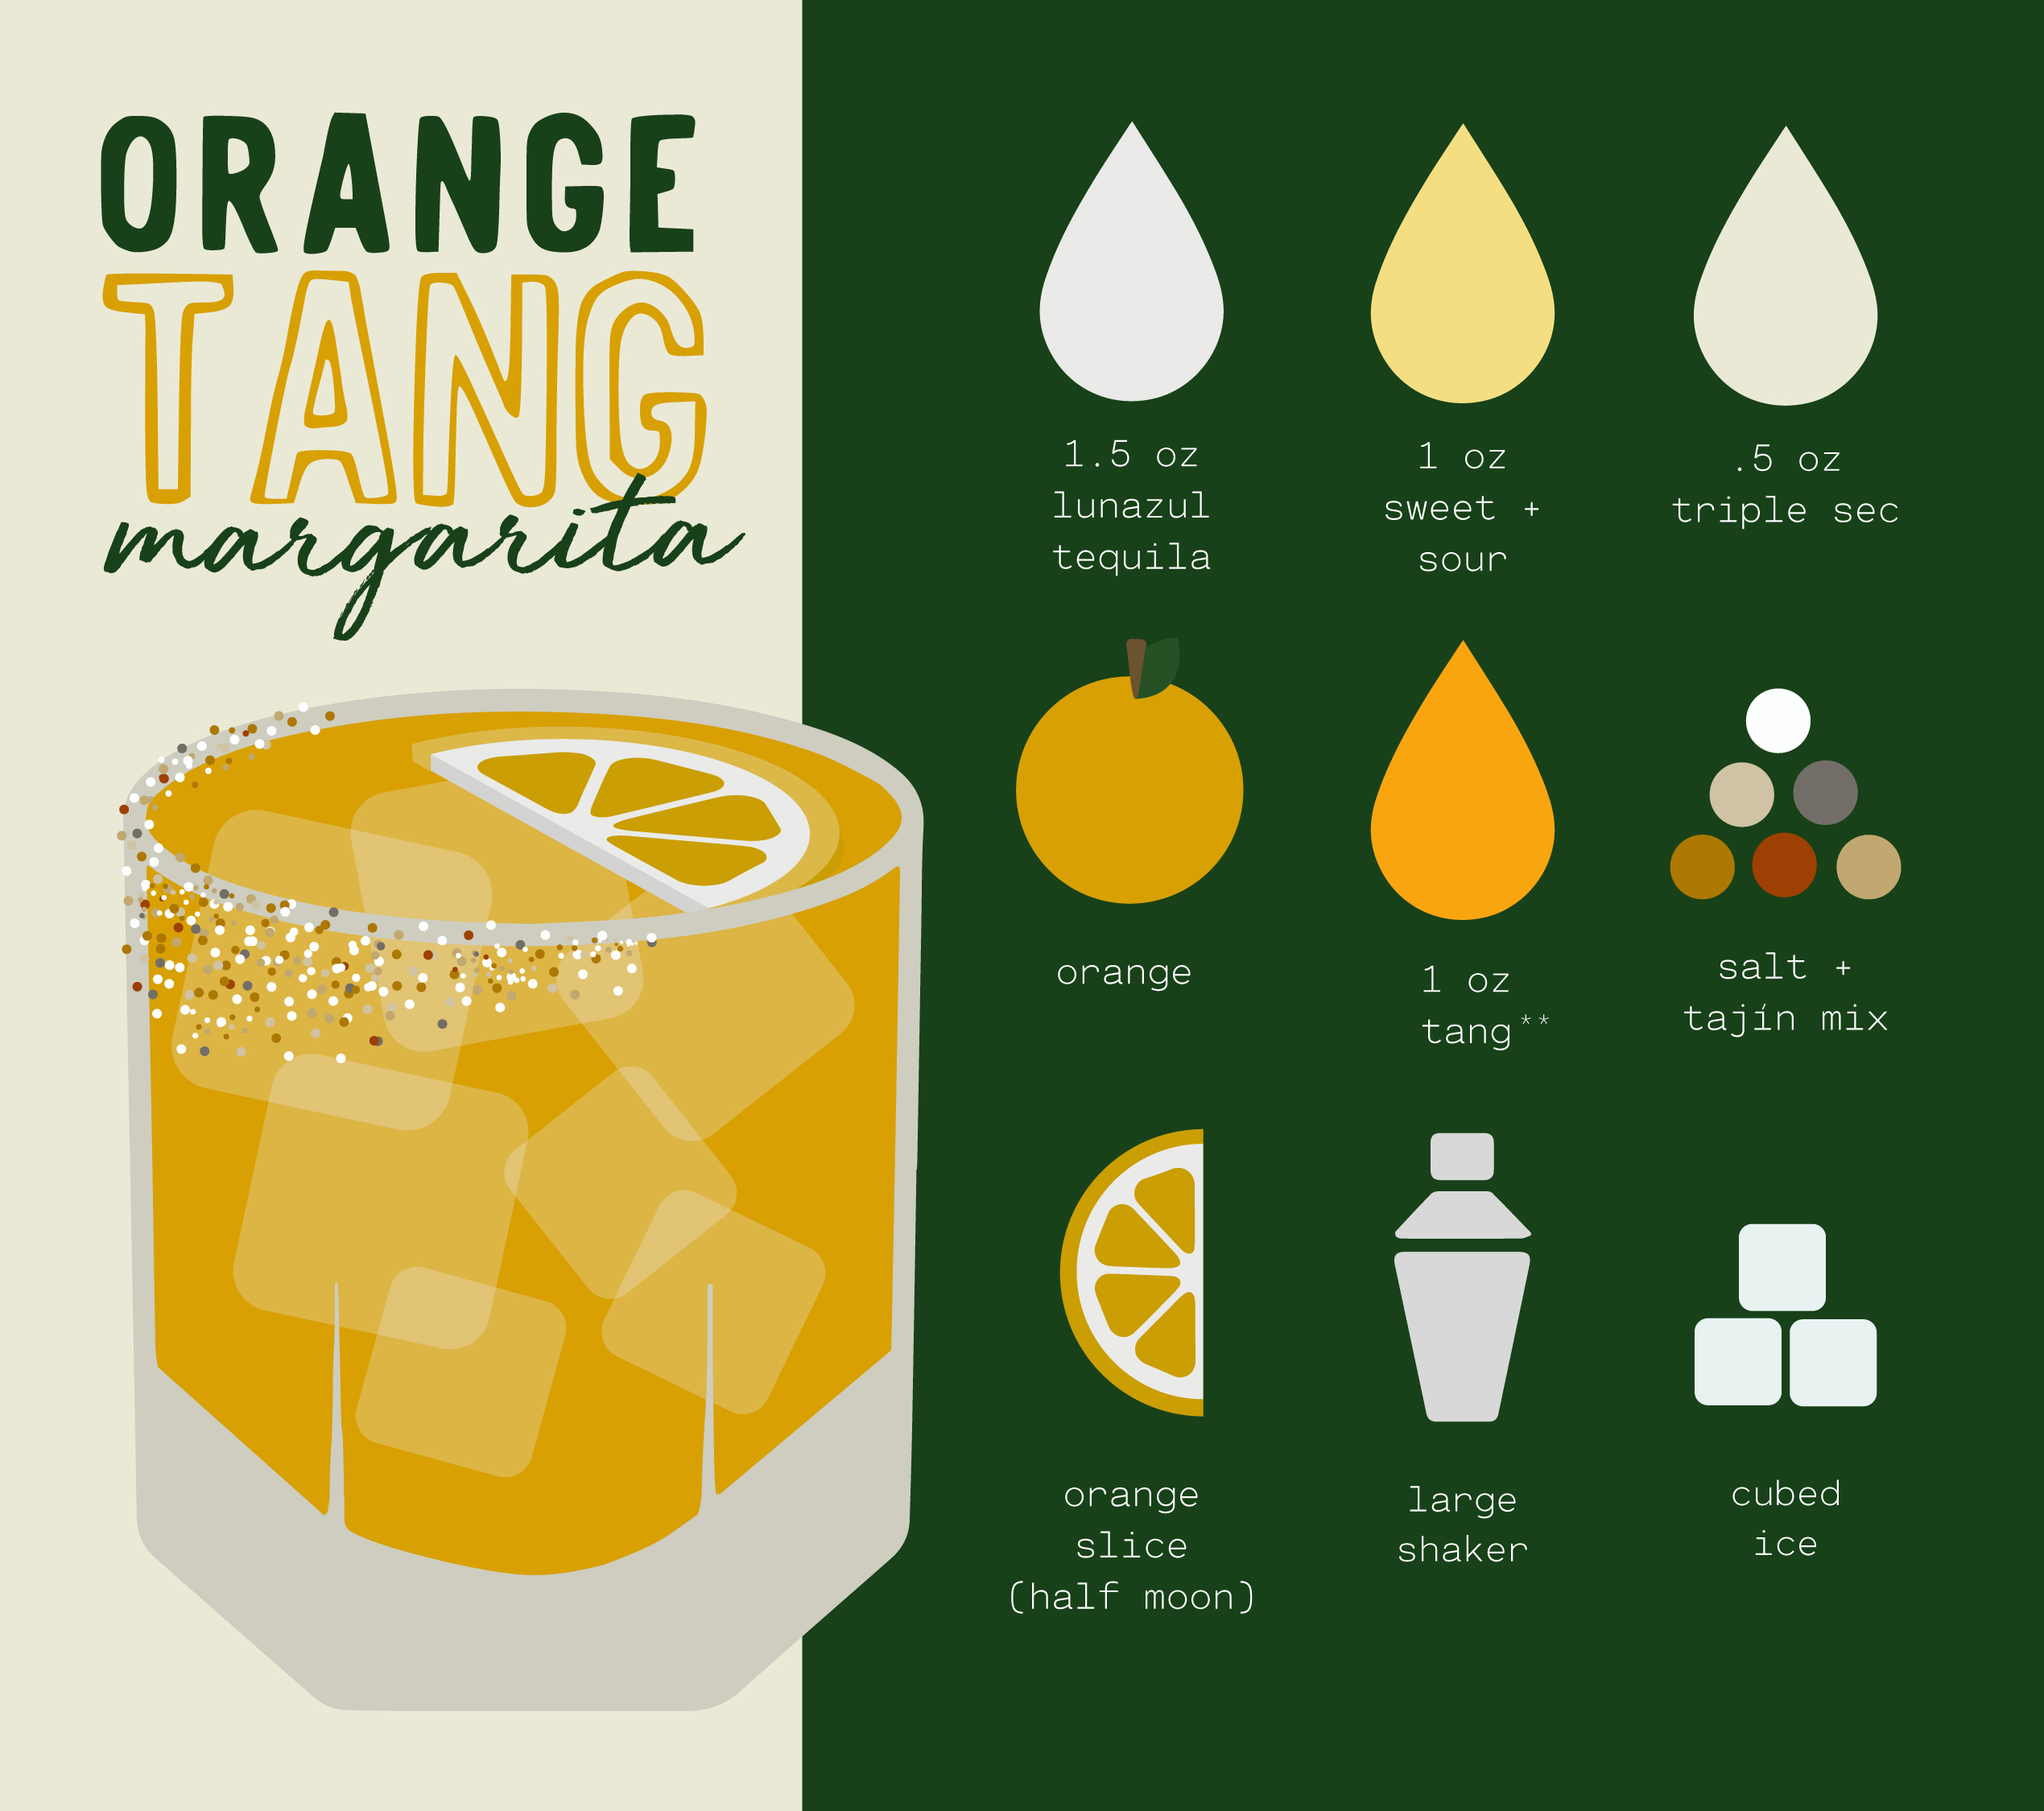 Illustration of the Orange Tang Margarita Recipe